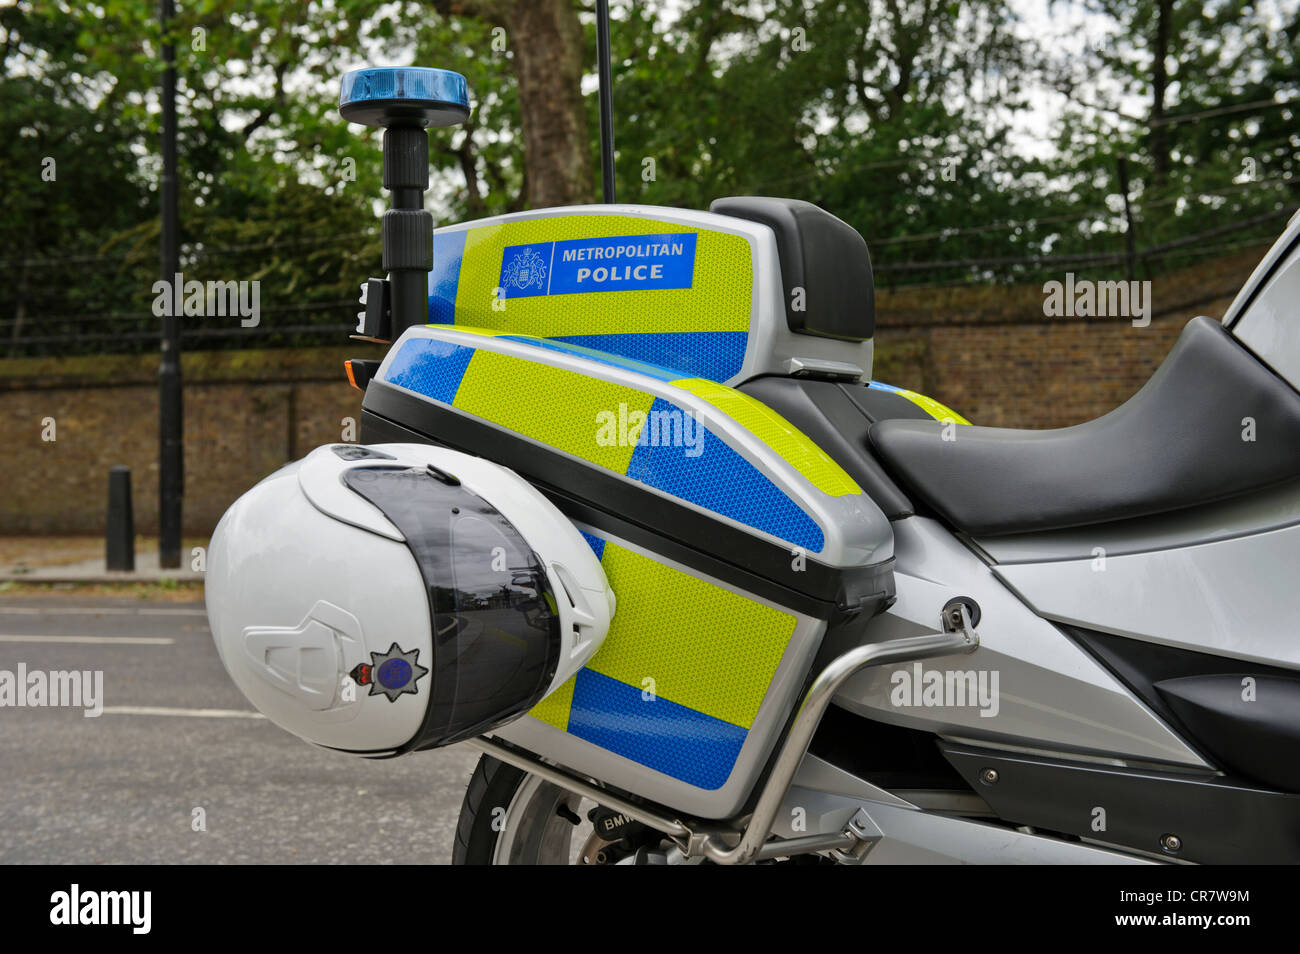 British Police Helmet and Motorcycle, London, England, UK Stock Photo - Alamy